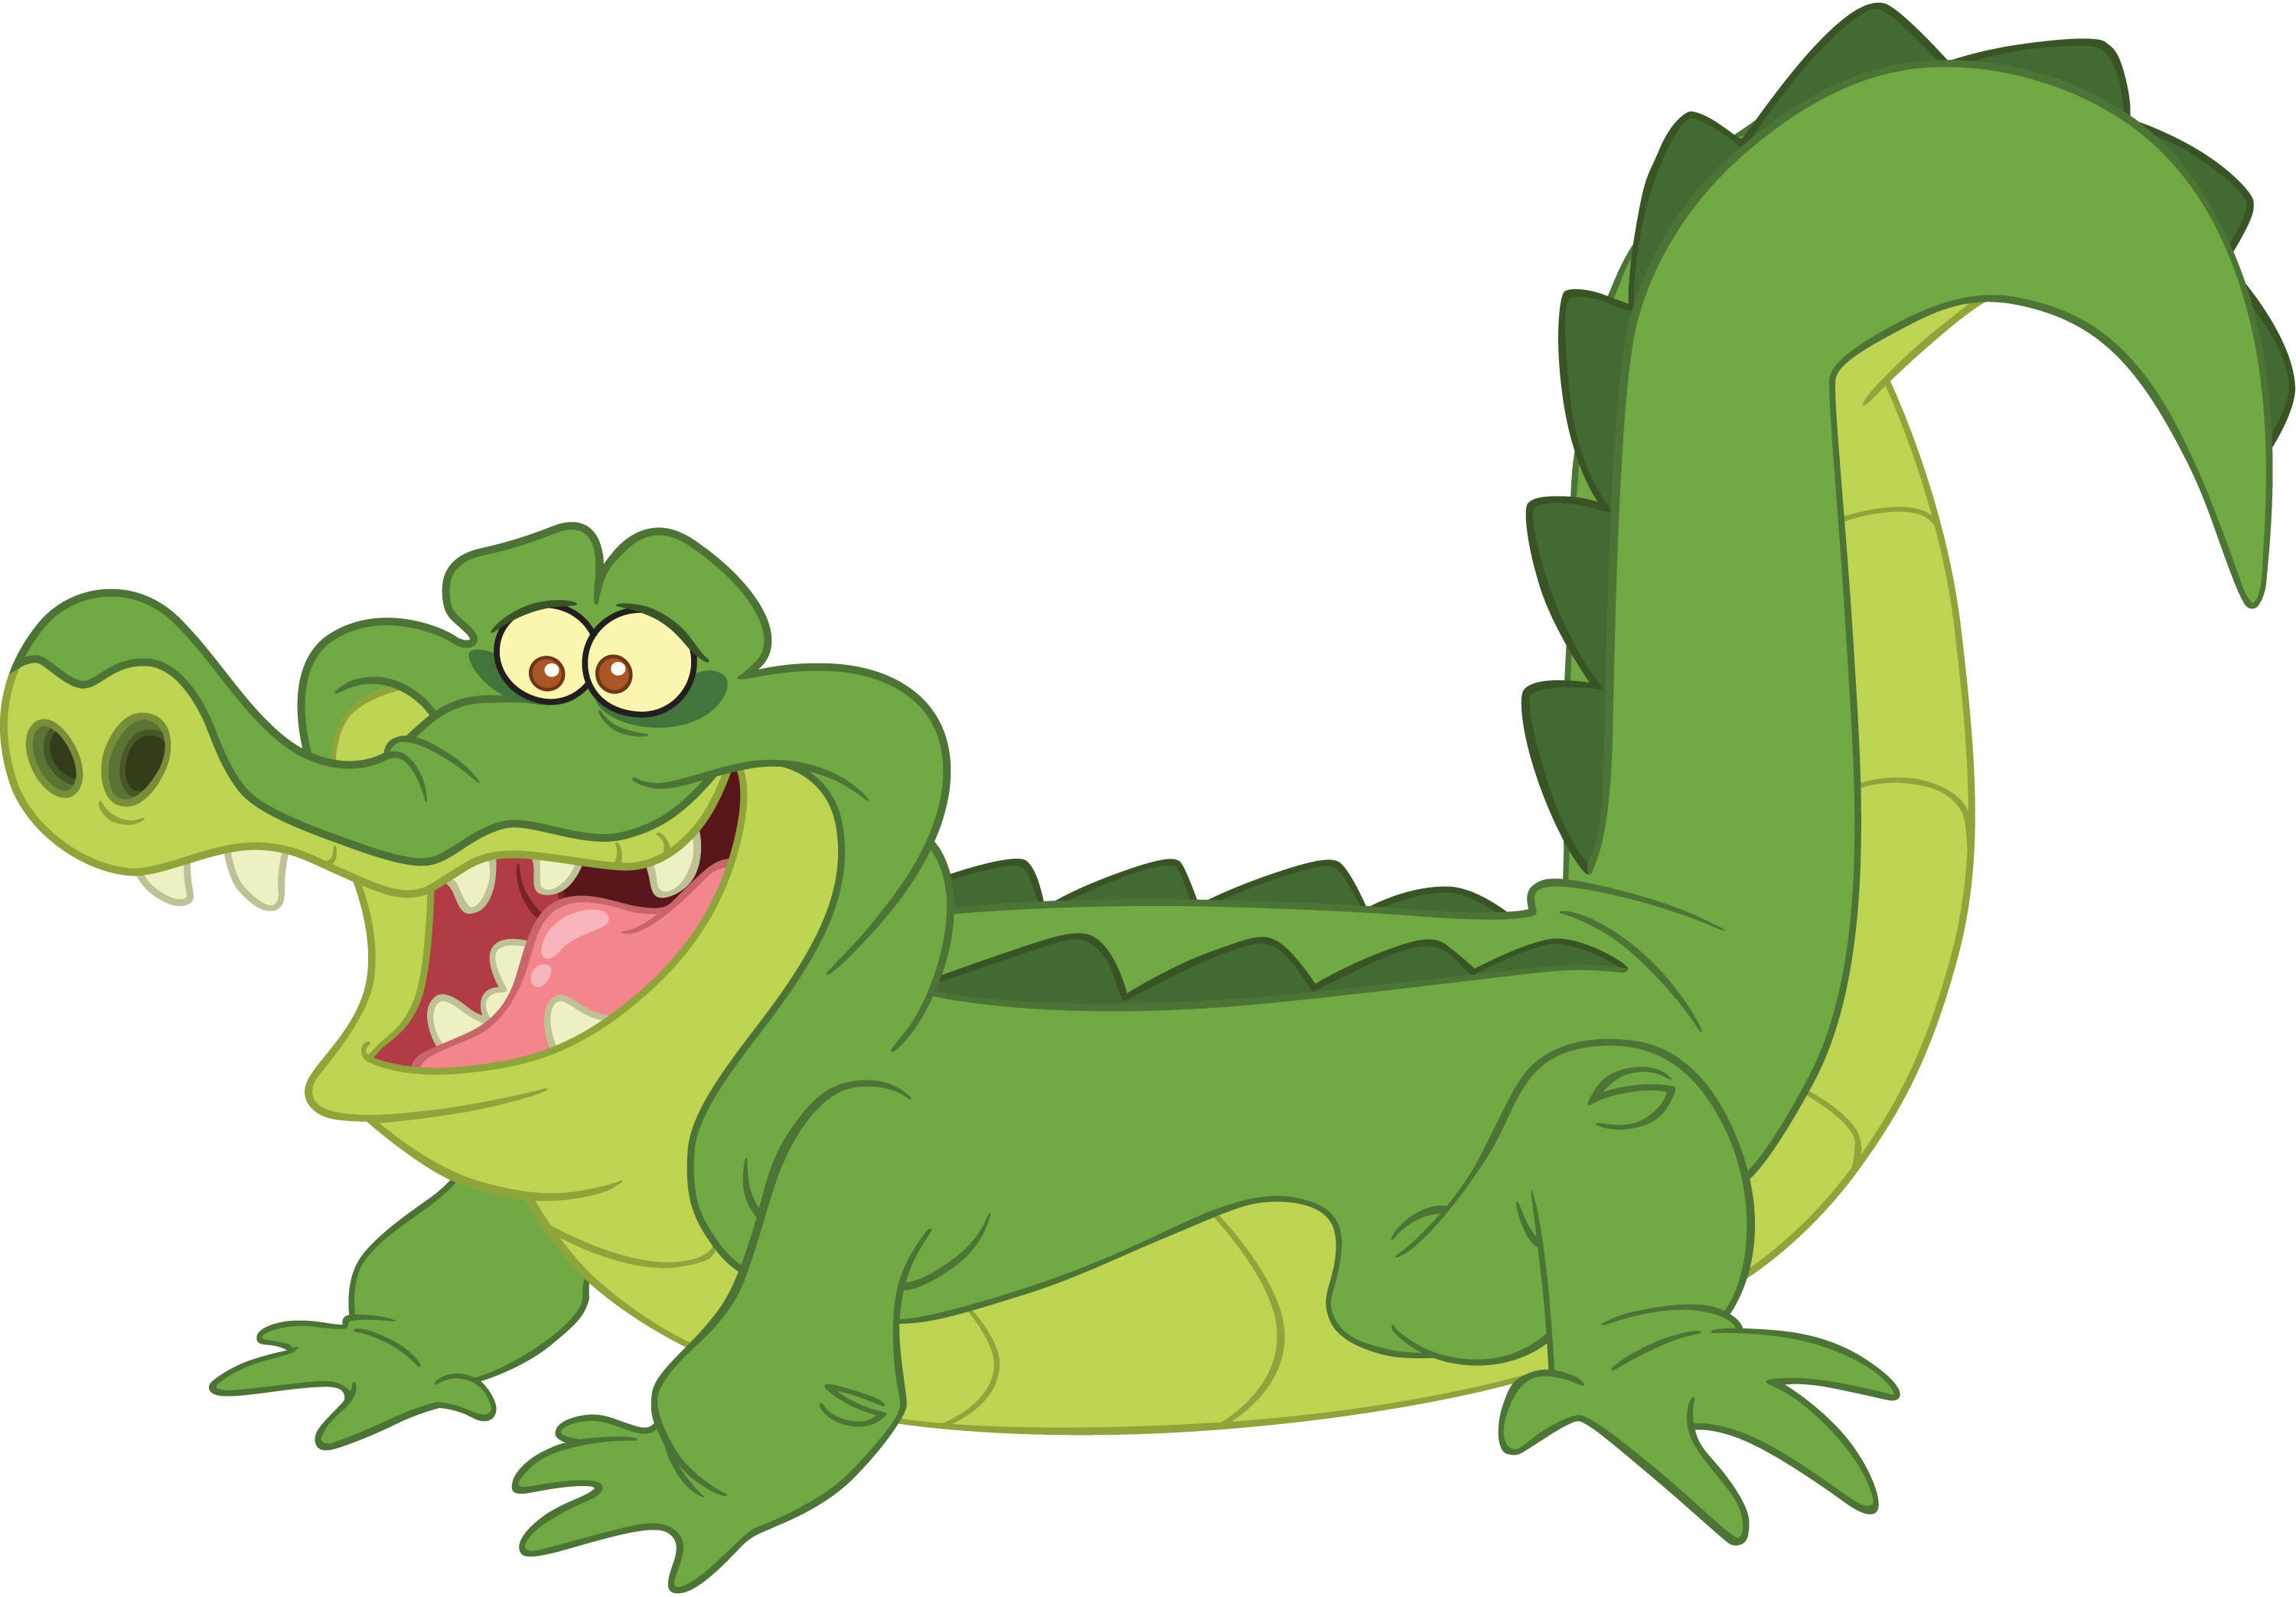 Crocodile clipart 2 image